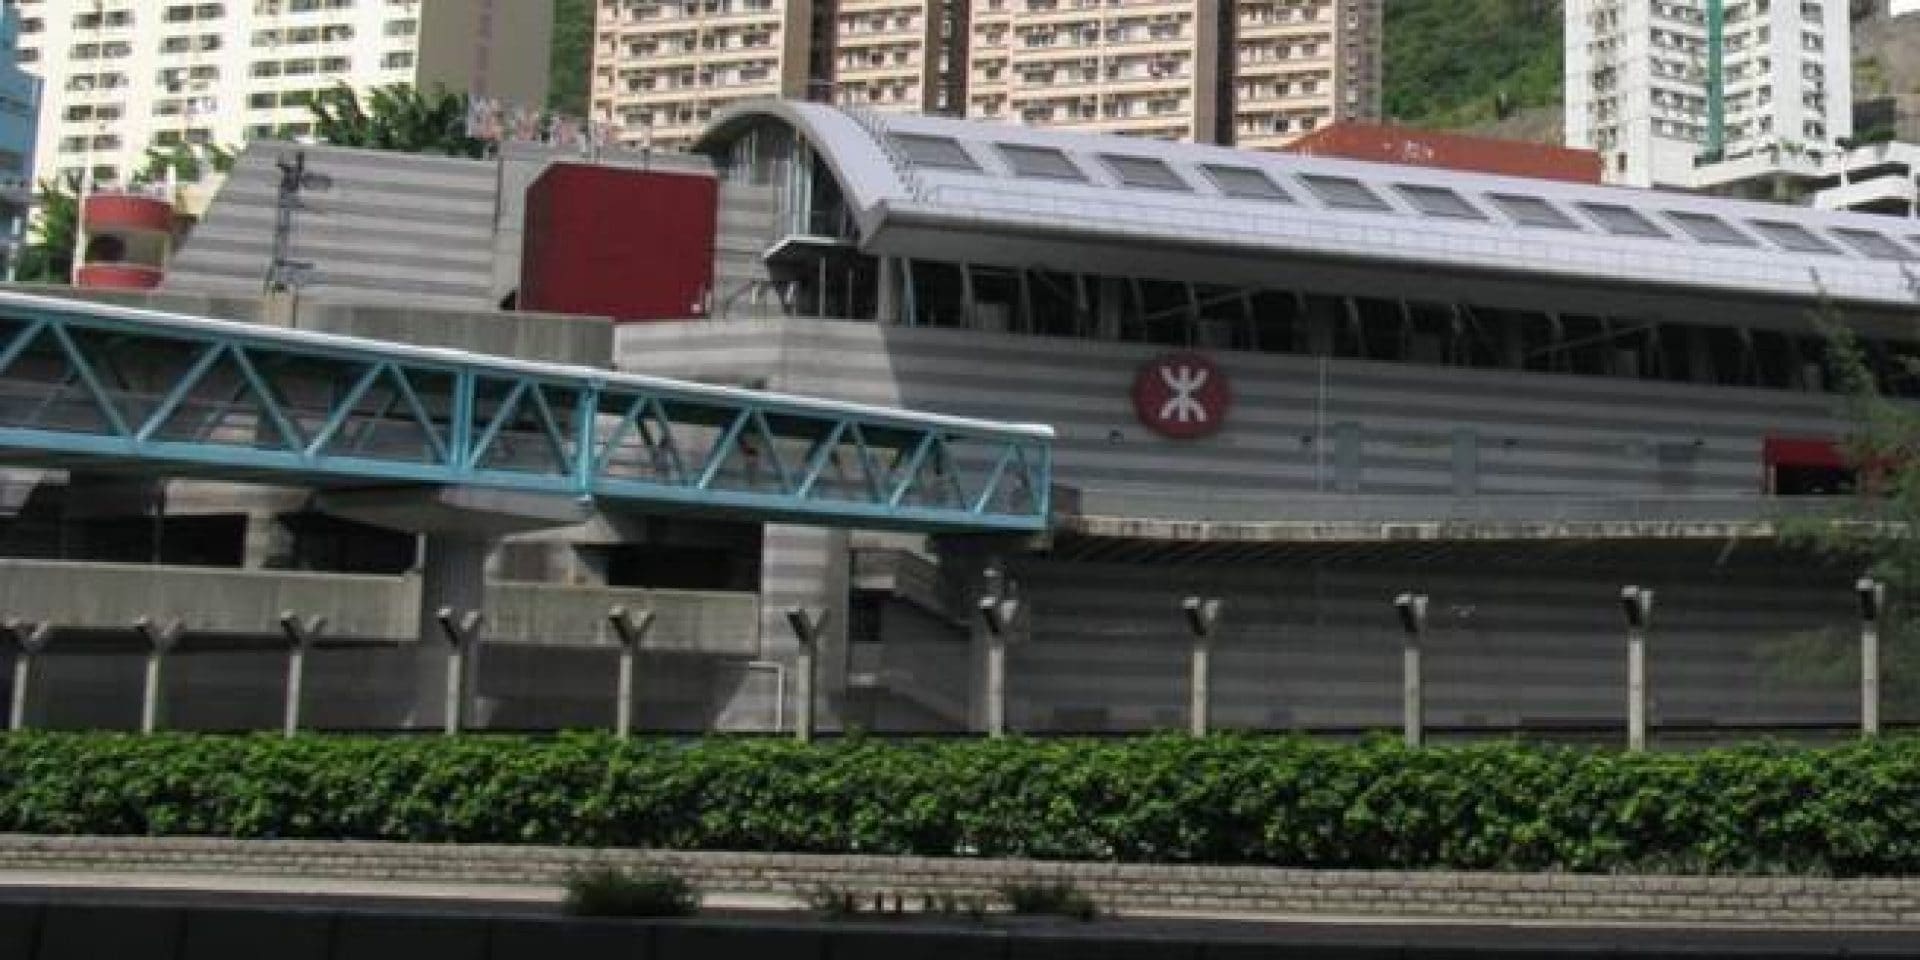 Hilti STATION DE MÉTRO LAI KING À HONG KONG